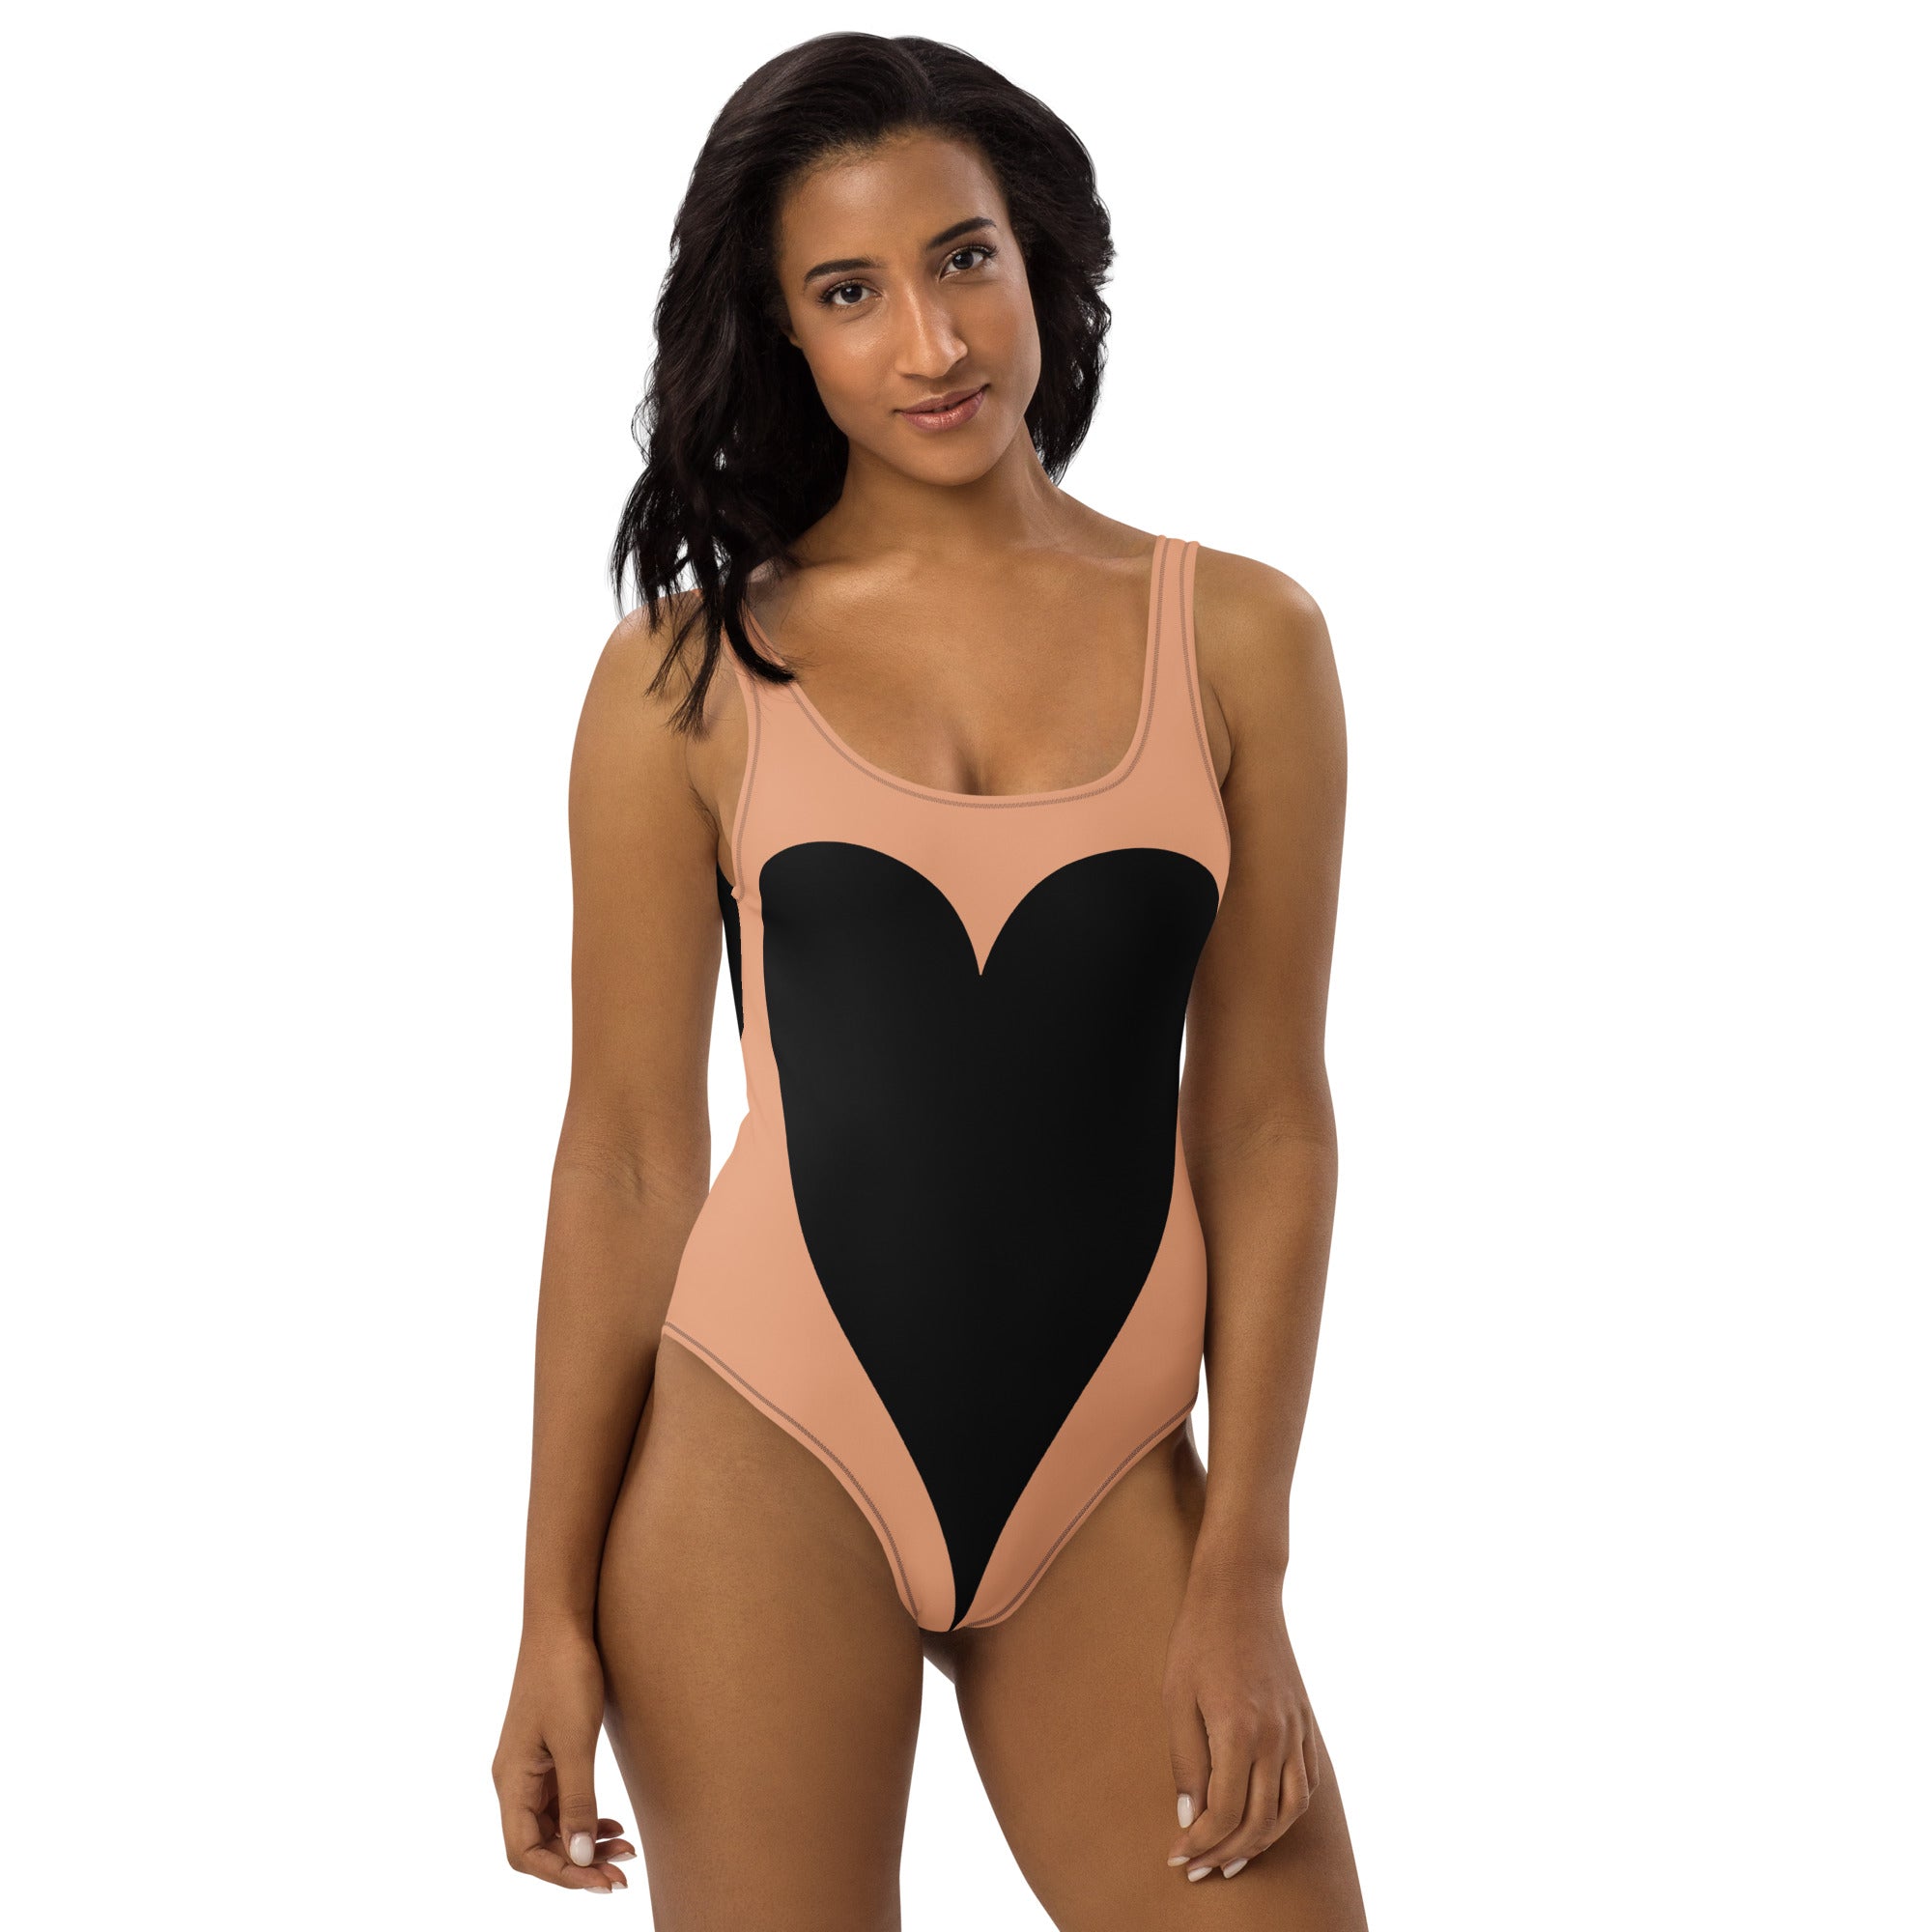 Black Heart Shaped One-Piece Swimsuit